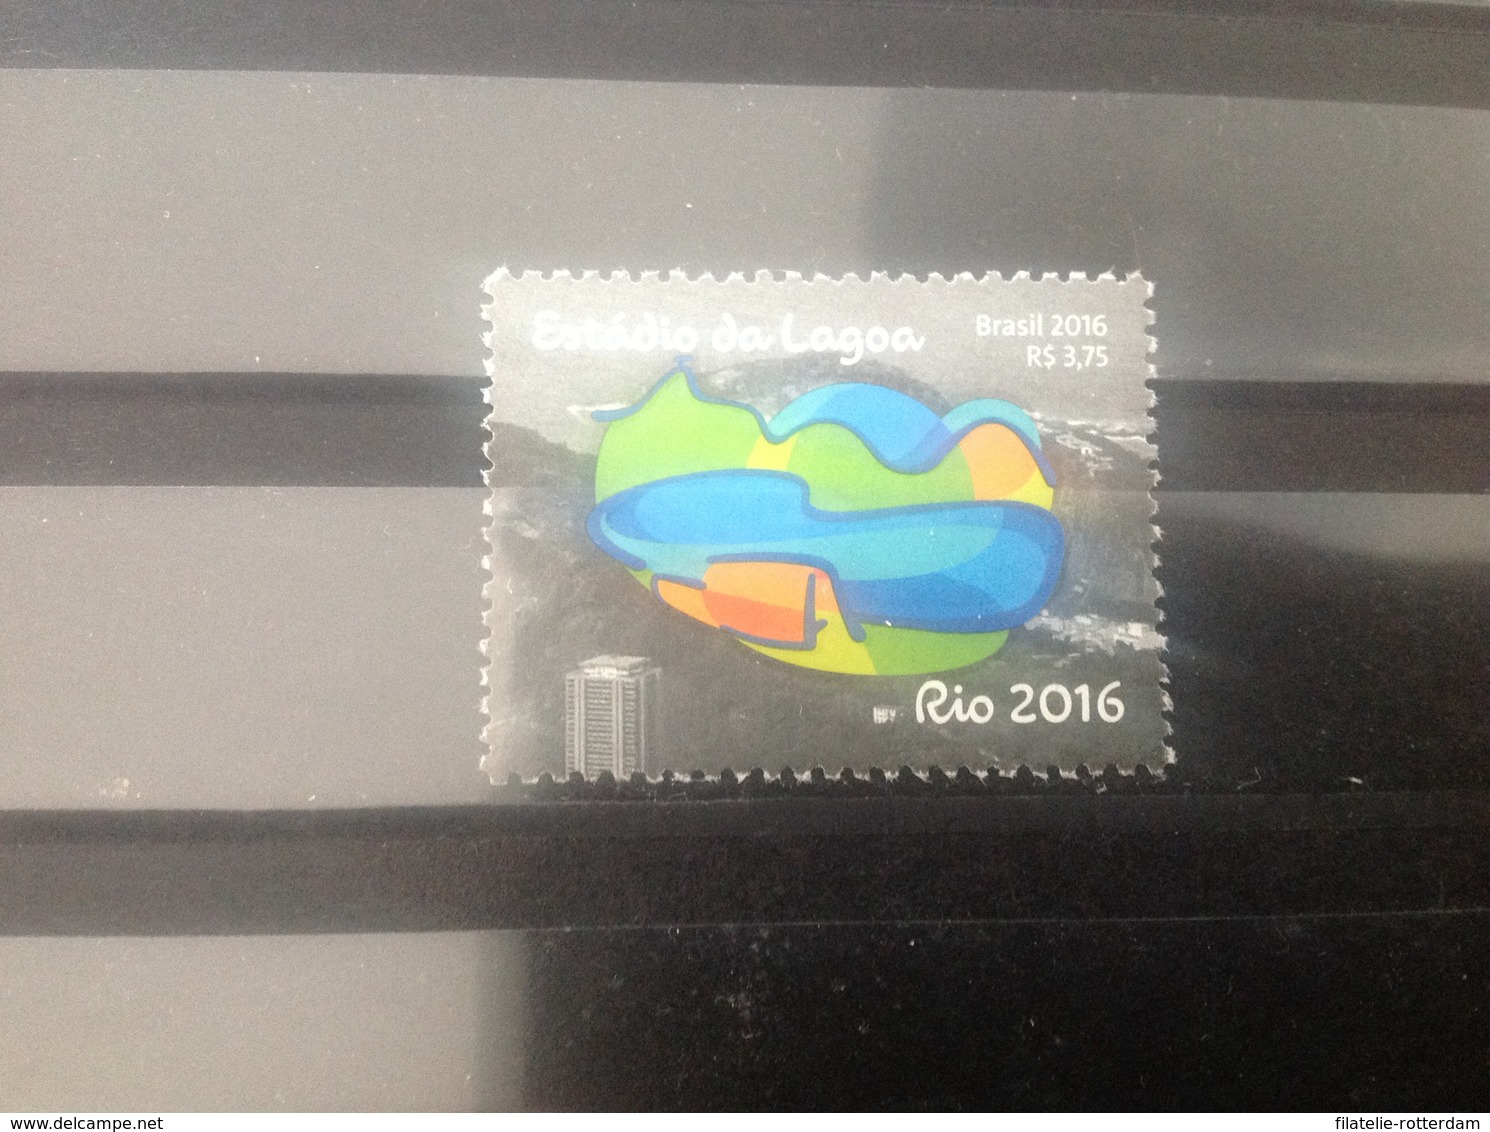 Brazilië / Brazil - Olympisch Stadion (3.75) 2016 - Used Stamps